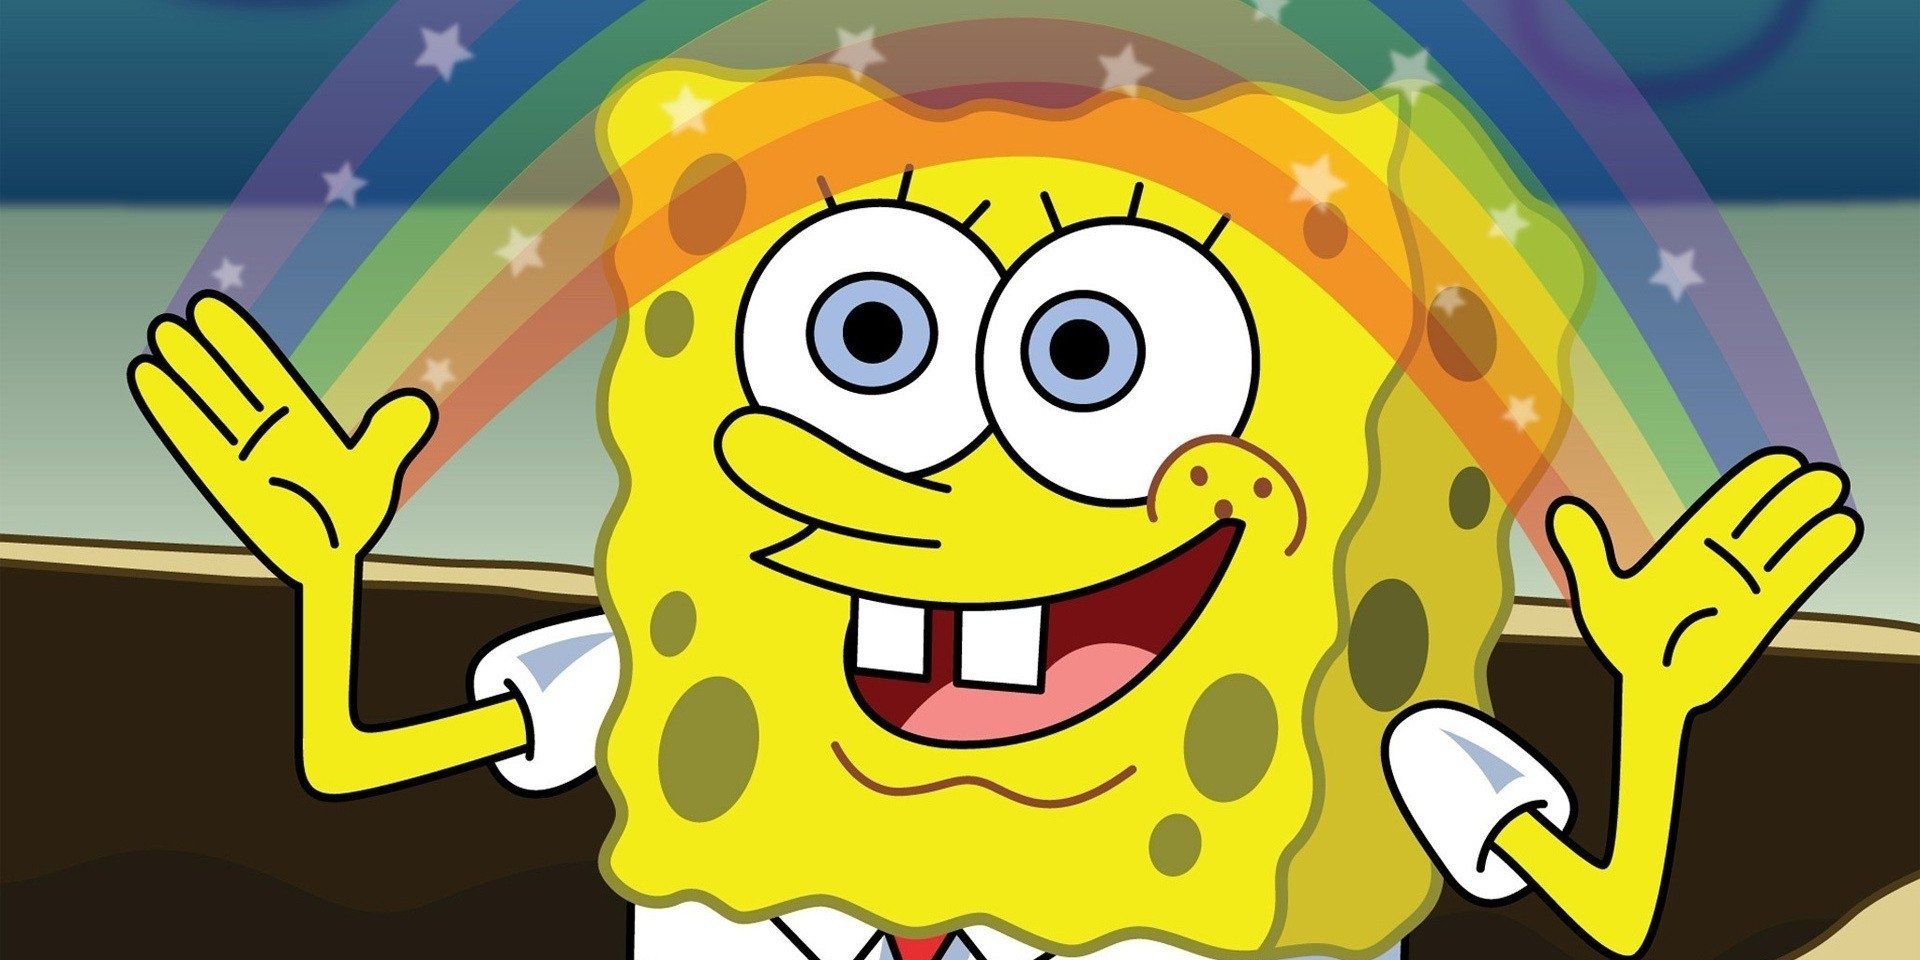 Spongebob Squarepants with a rainbow between his hands